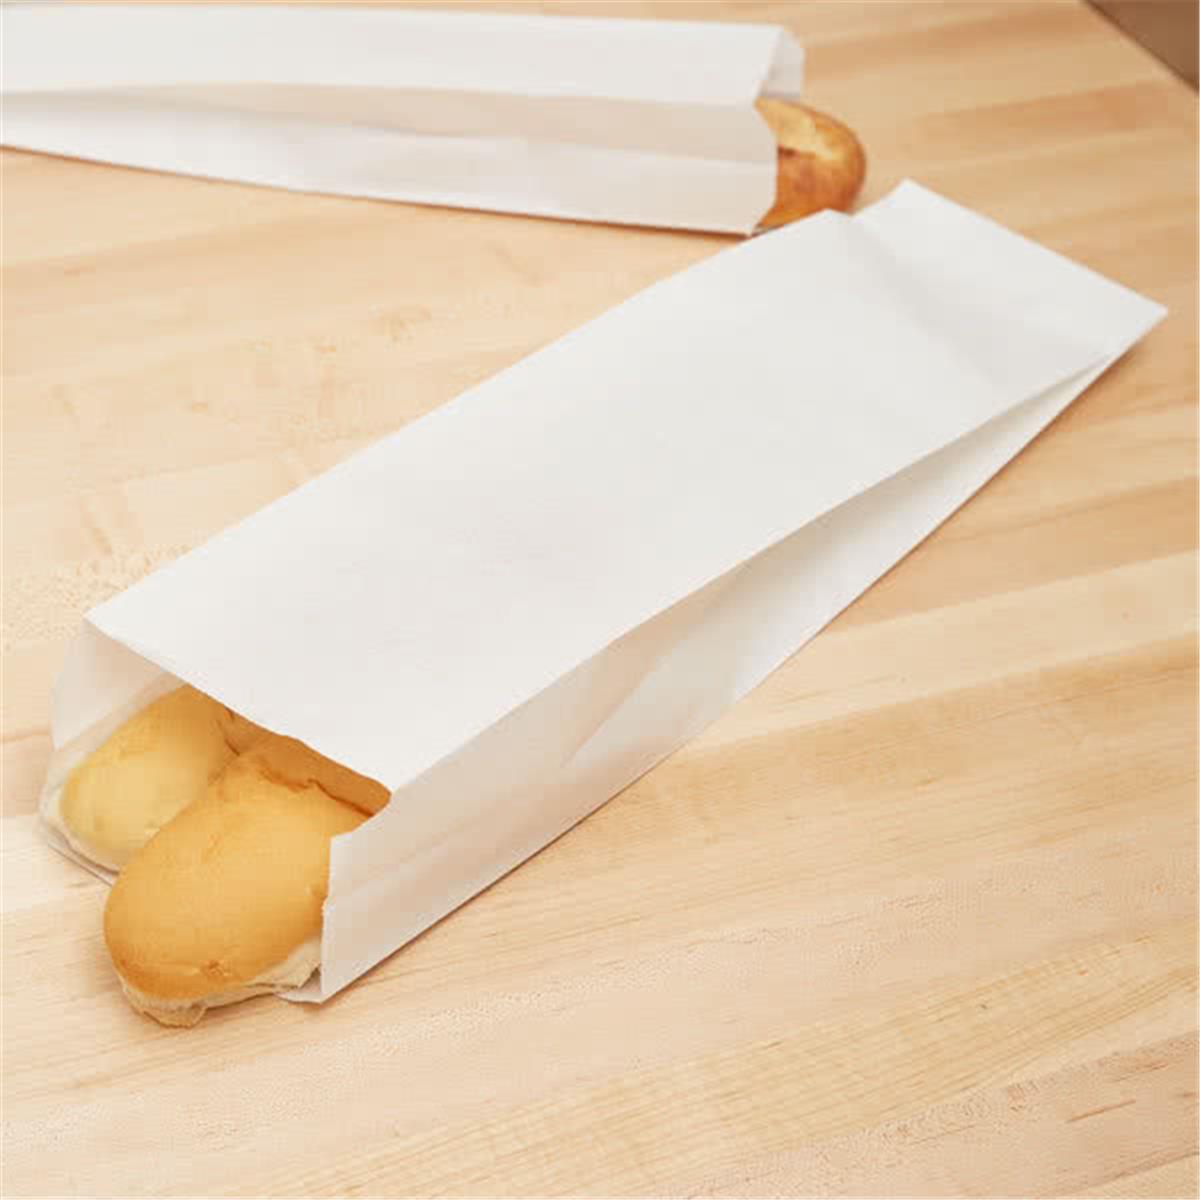 A844 8 X 4 X 14 In. Bread Bag, Plain White - Case Of 1000